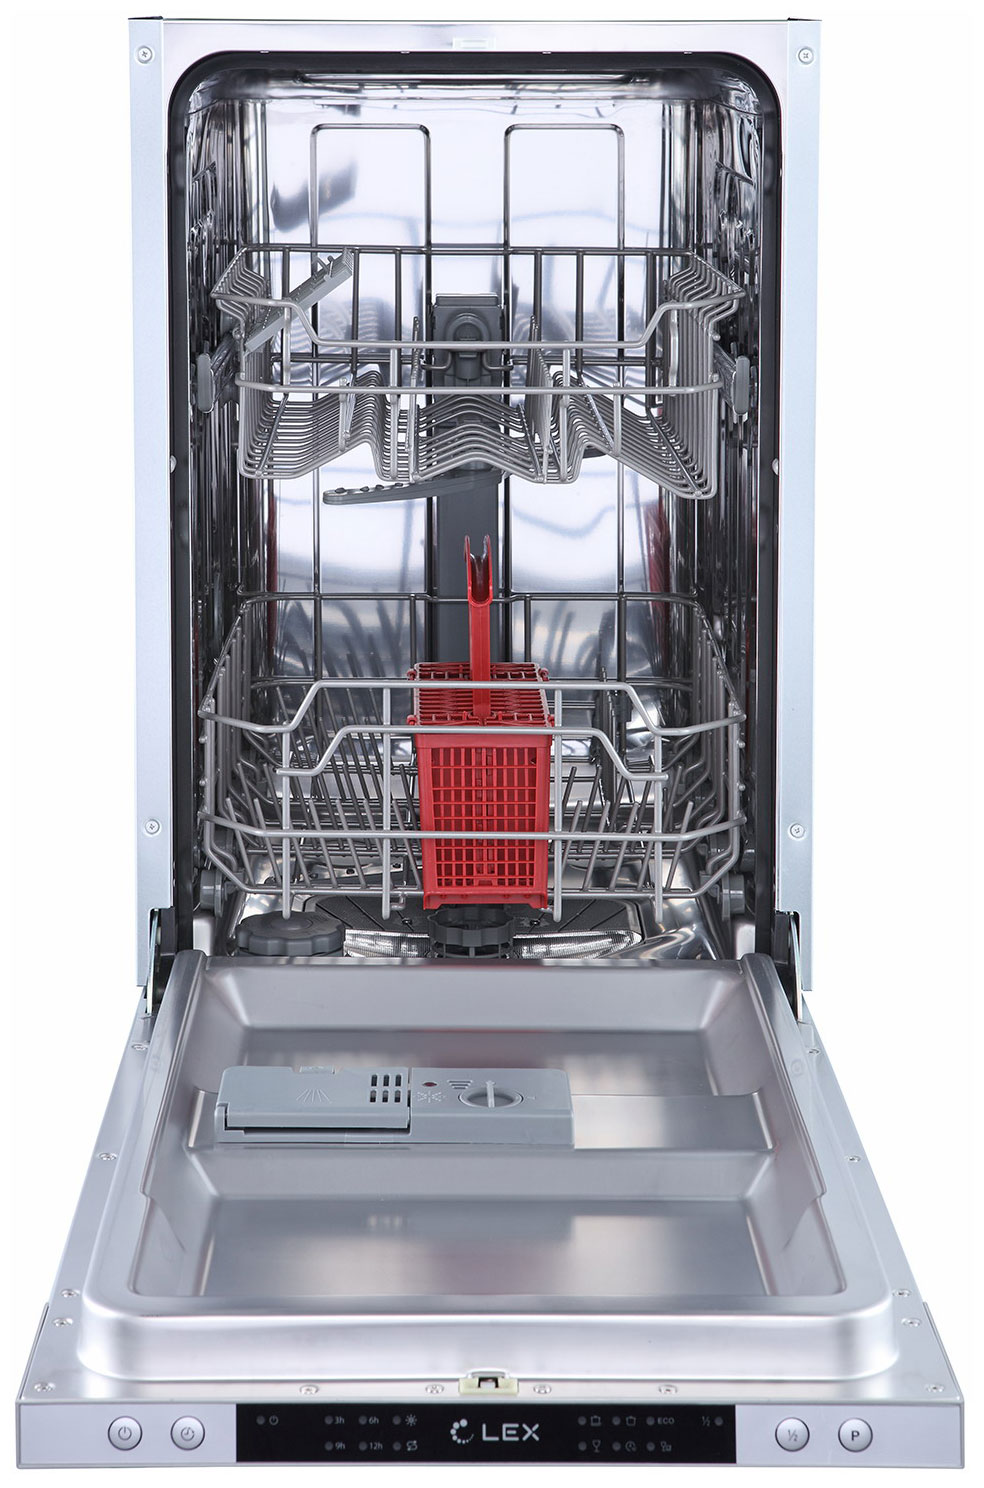 Встраиваемая посудомоечная машина LEX PM 4562 B посудомоечная машина встраиваемая lex pm 6062 b 60 см chmi000302